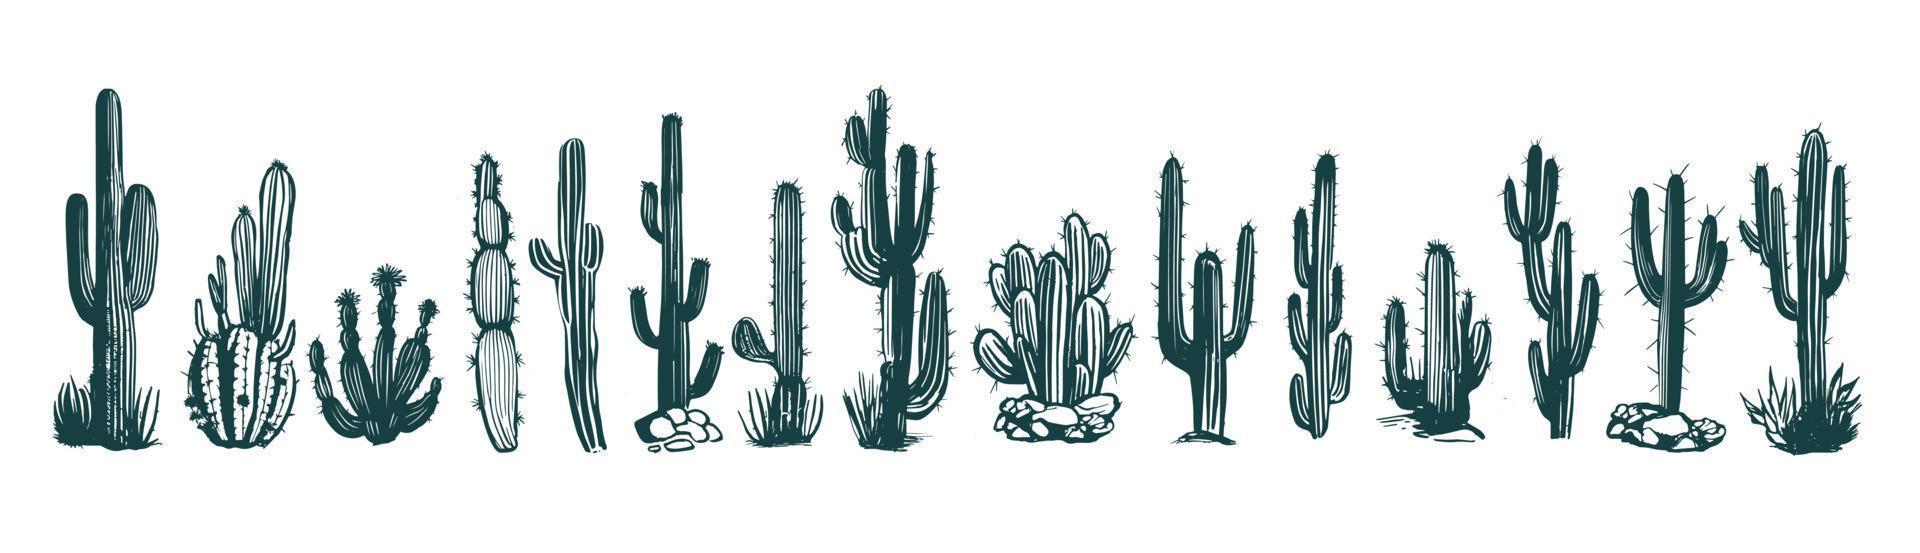 Cactus set hand drawn illustrations, vector